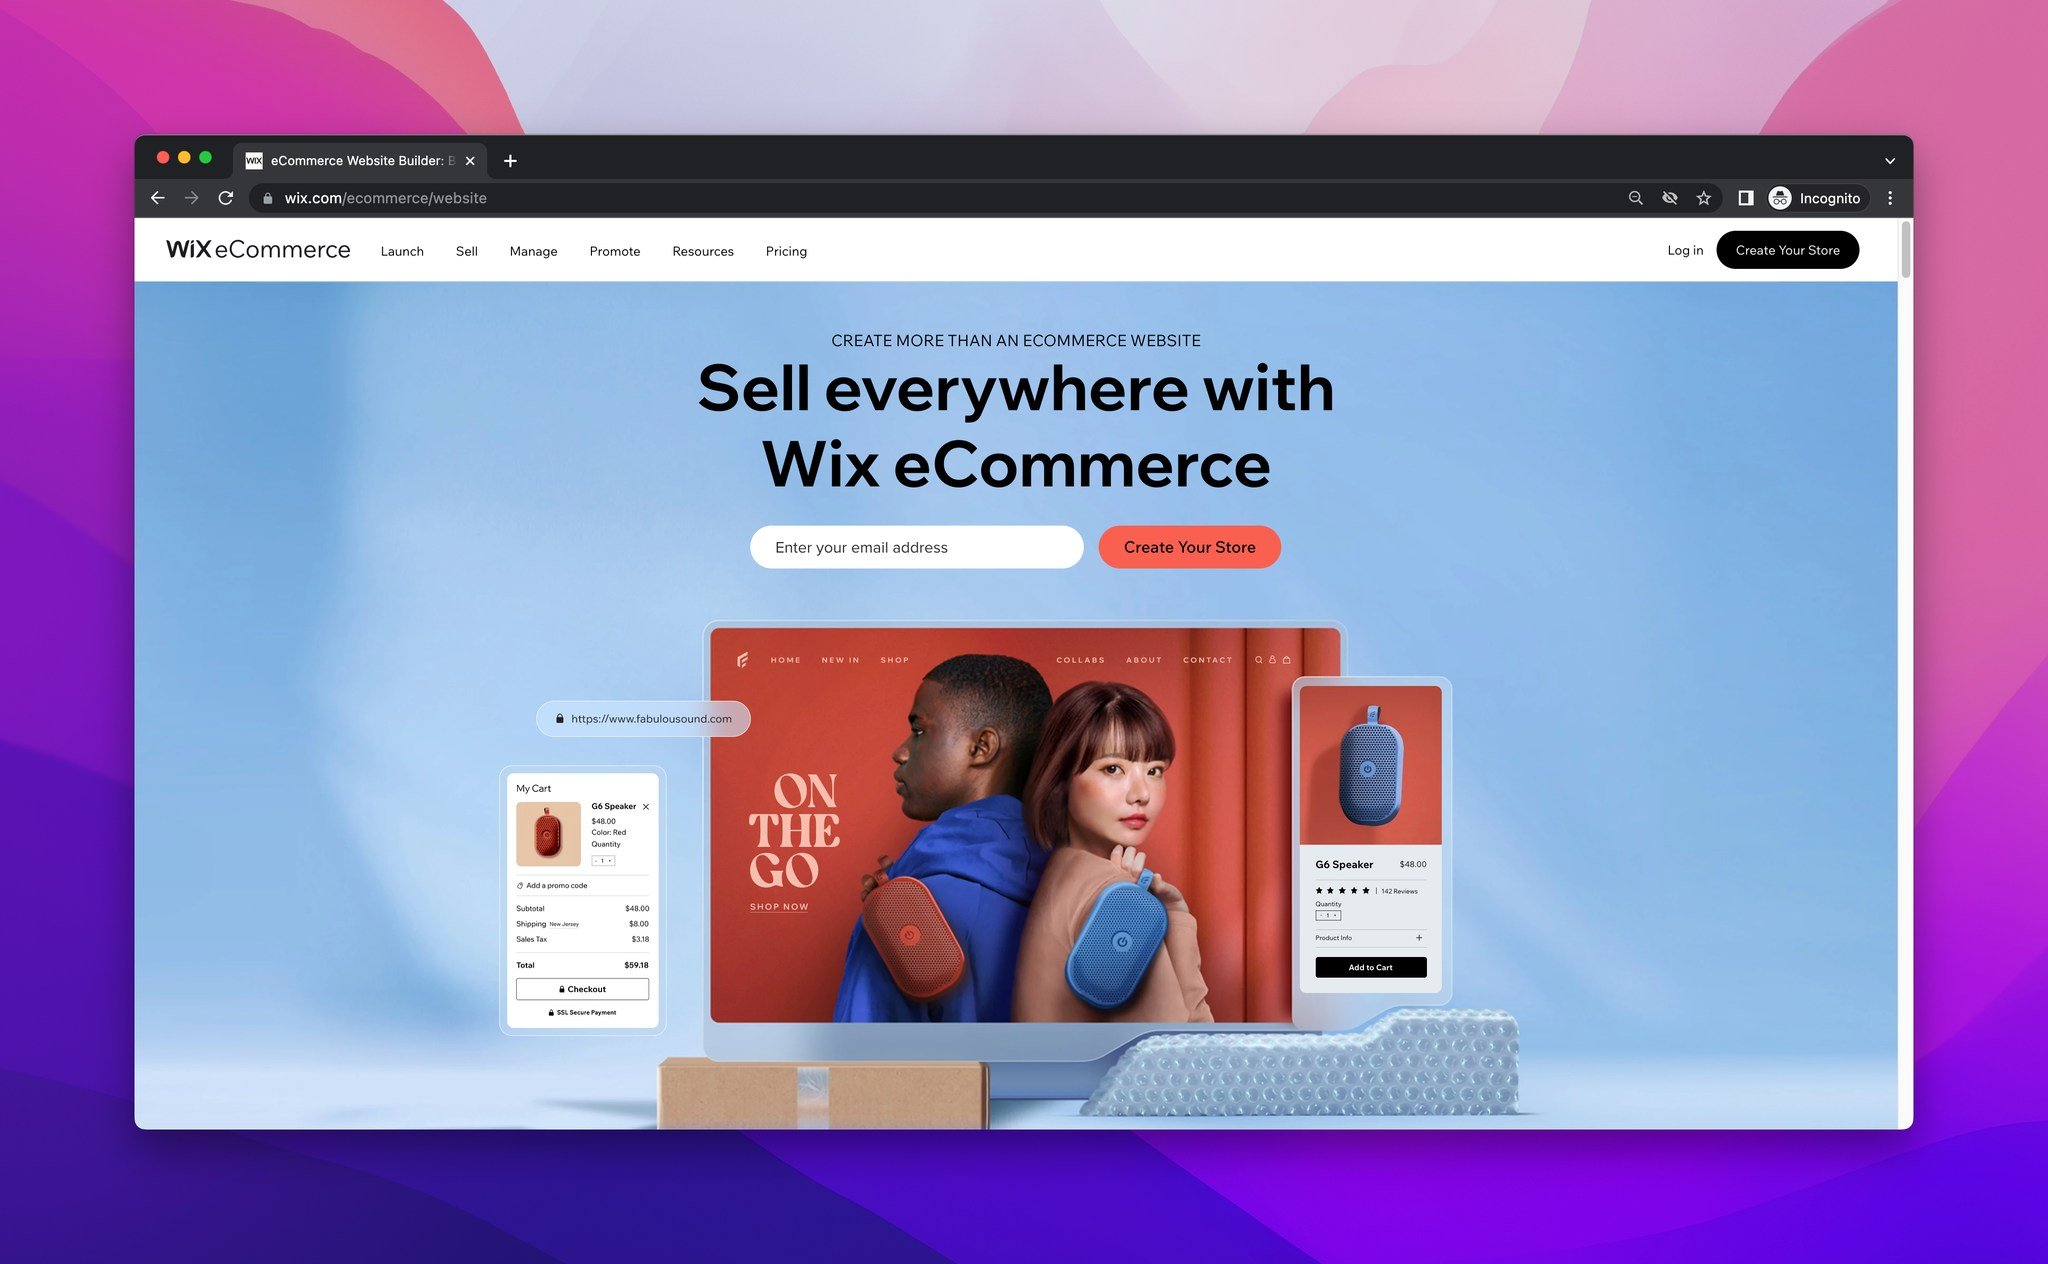 a screenshot of Wix e-commerce website landing page